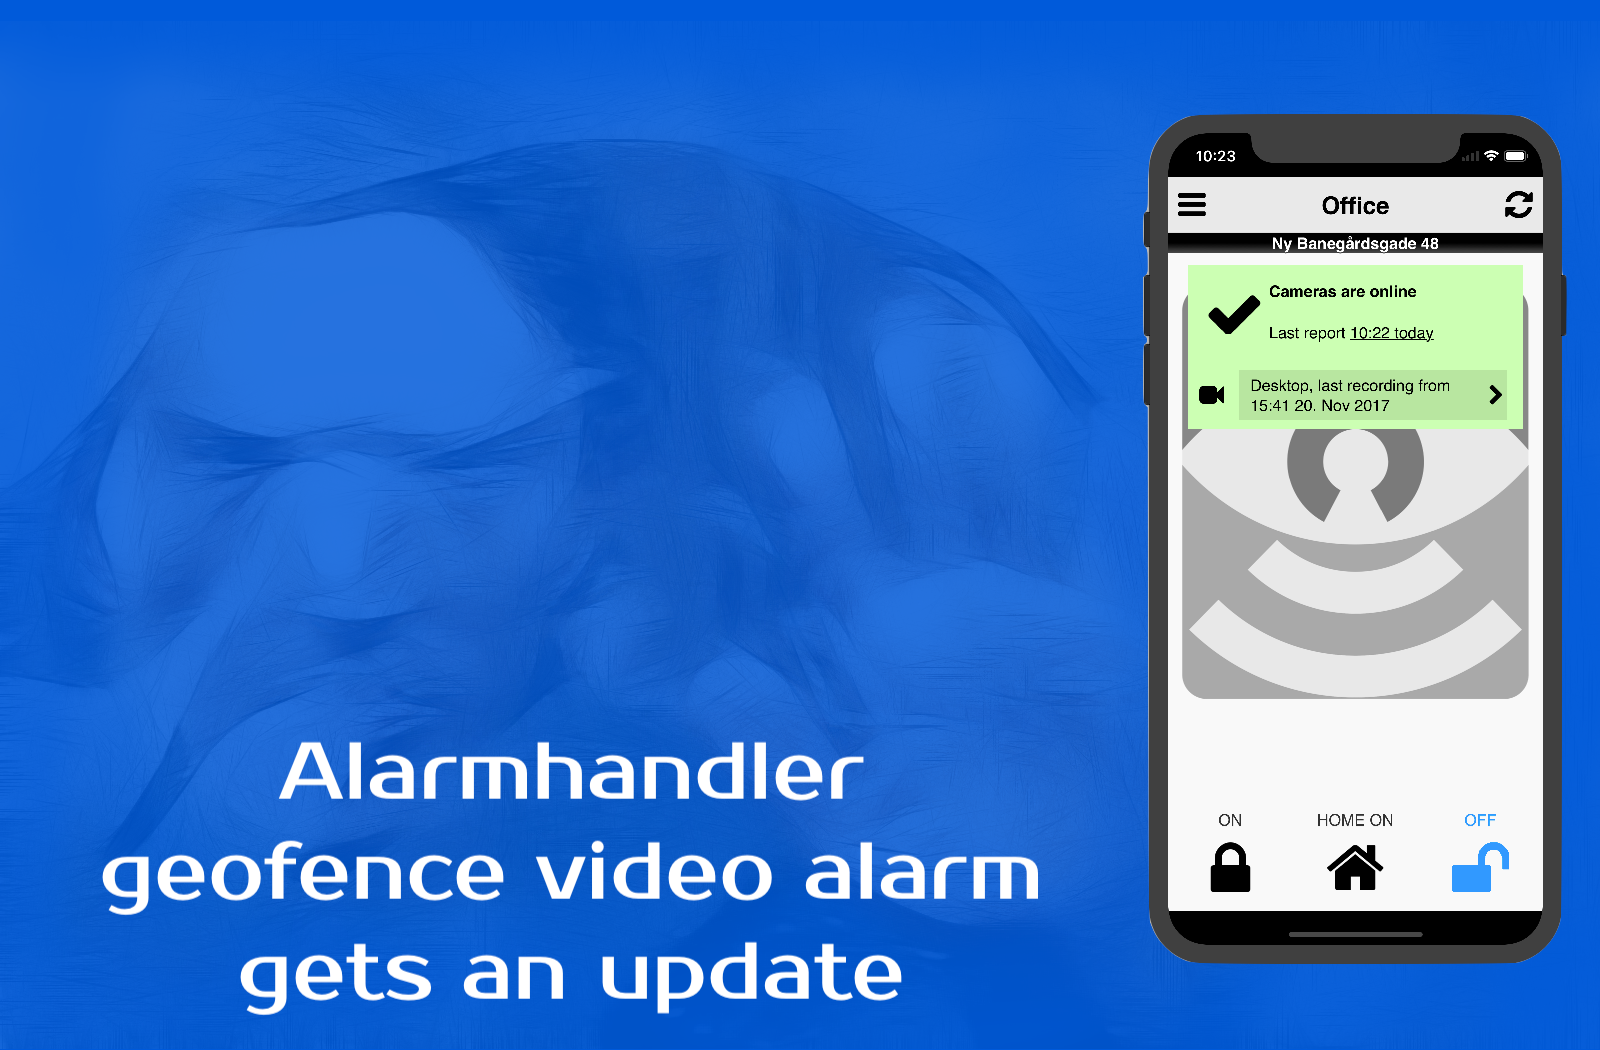 Alarmhandler - a simpler video alarm